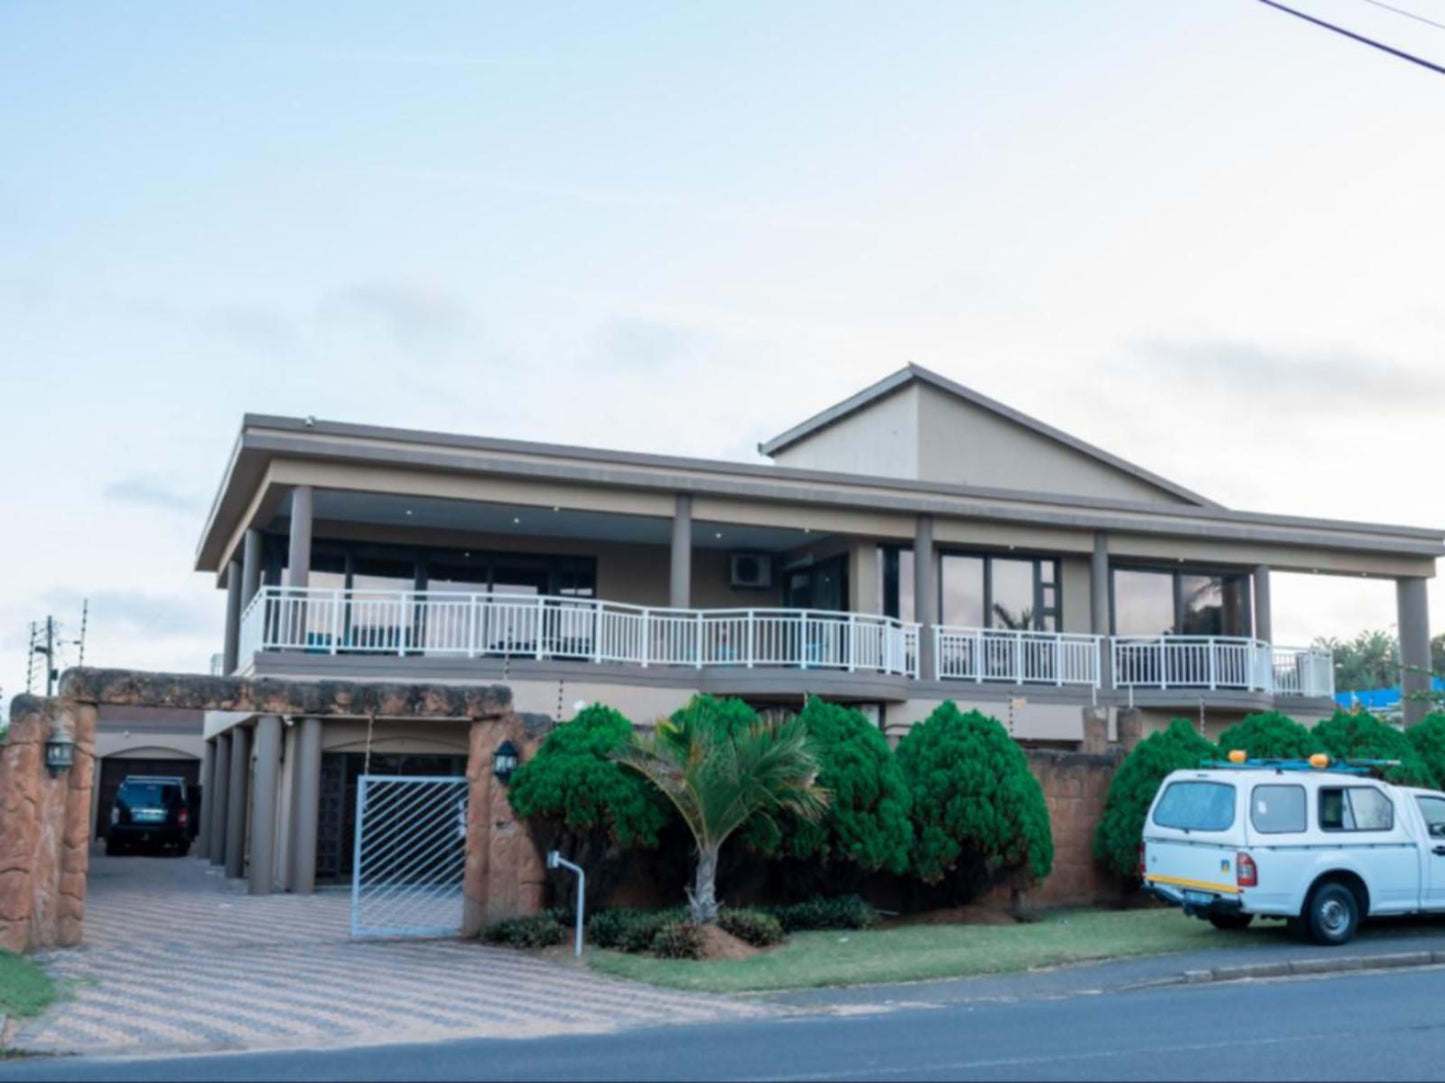 Dolphin Coast B And B Glenashley Durban Kwazulu Natal South Africa House, Building, Architecture, Window, Car, Vehicle